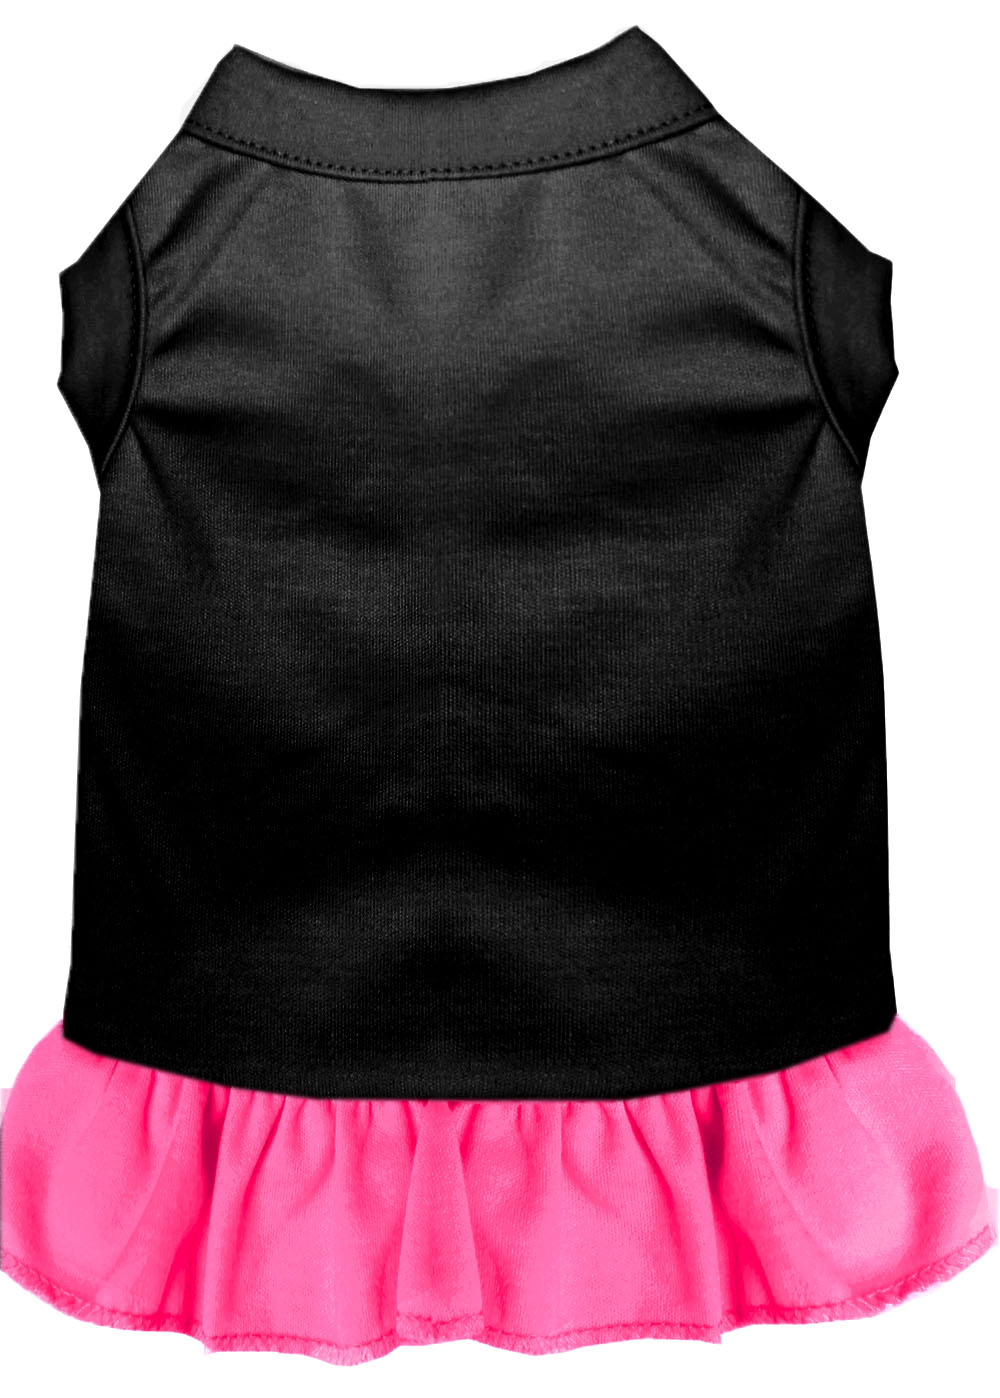 Plain Pet Dress Black with Bright Pink Lg